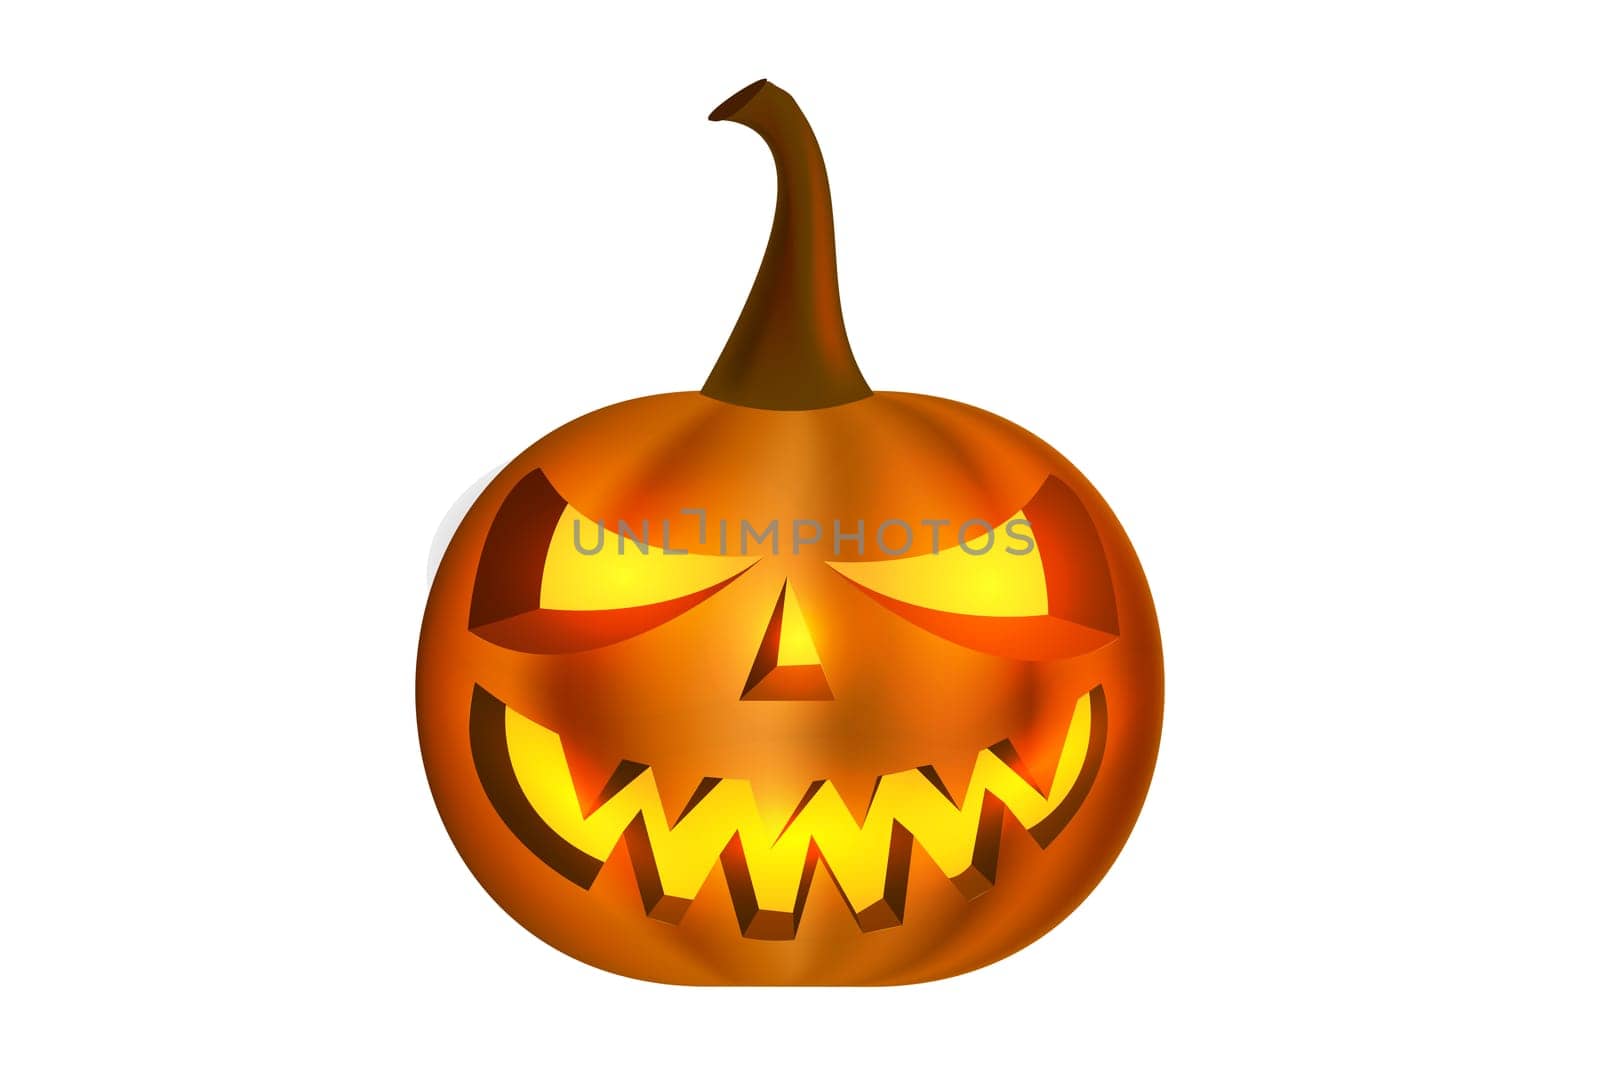 Pumpkin Halloween on white background isolated